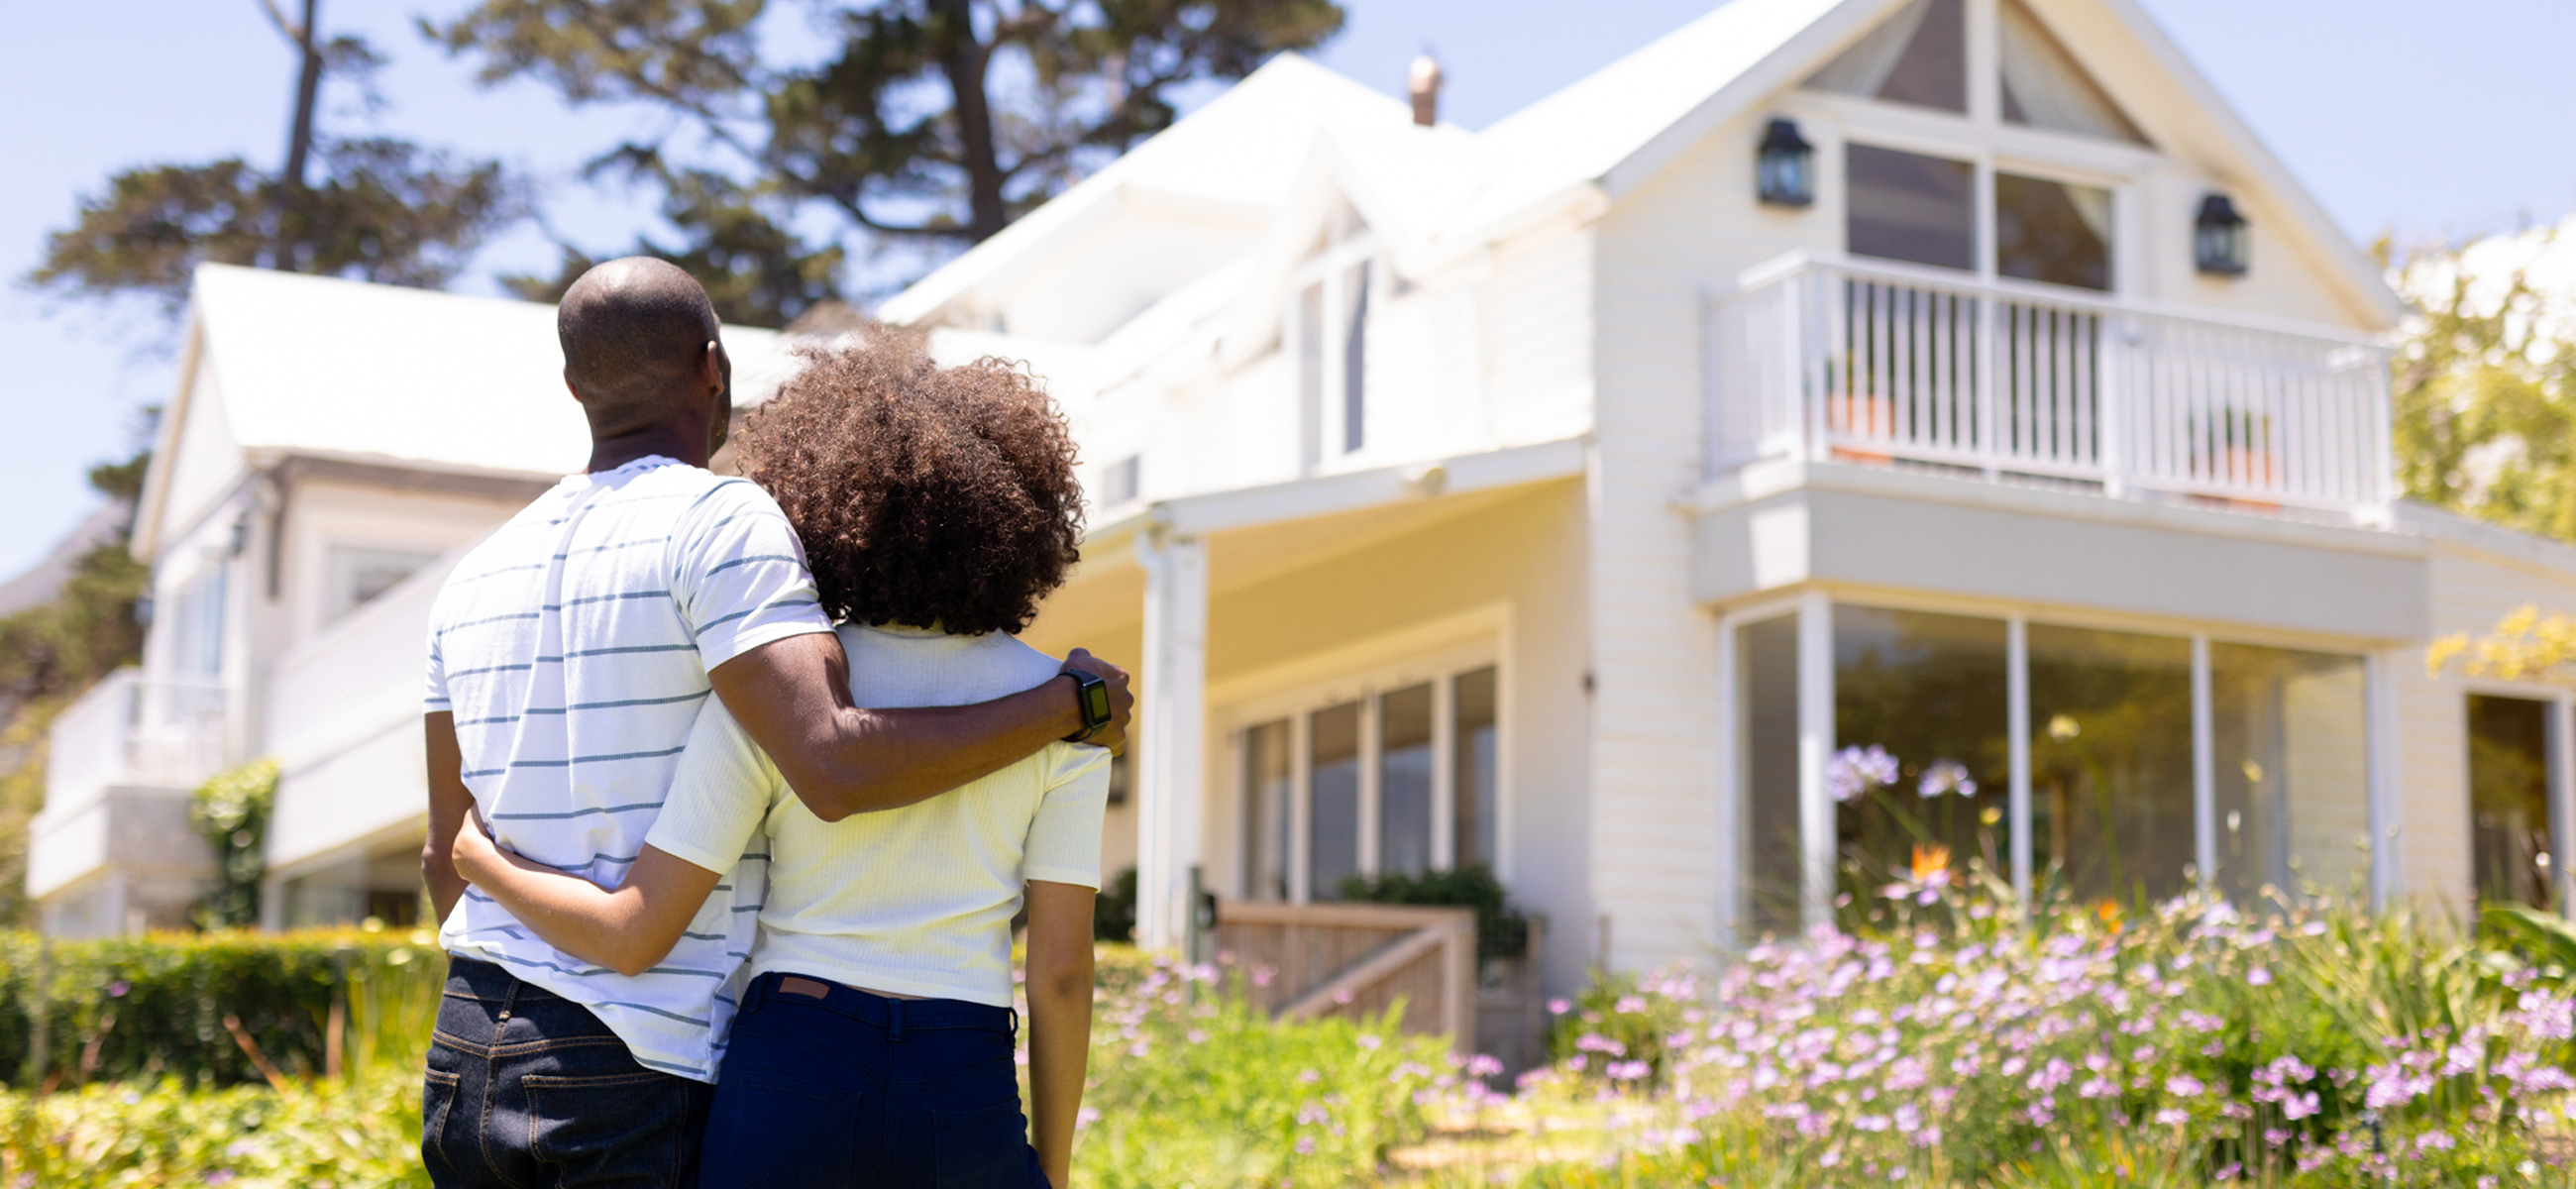 Nebraska Homeowners with home insurance coverage